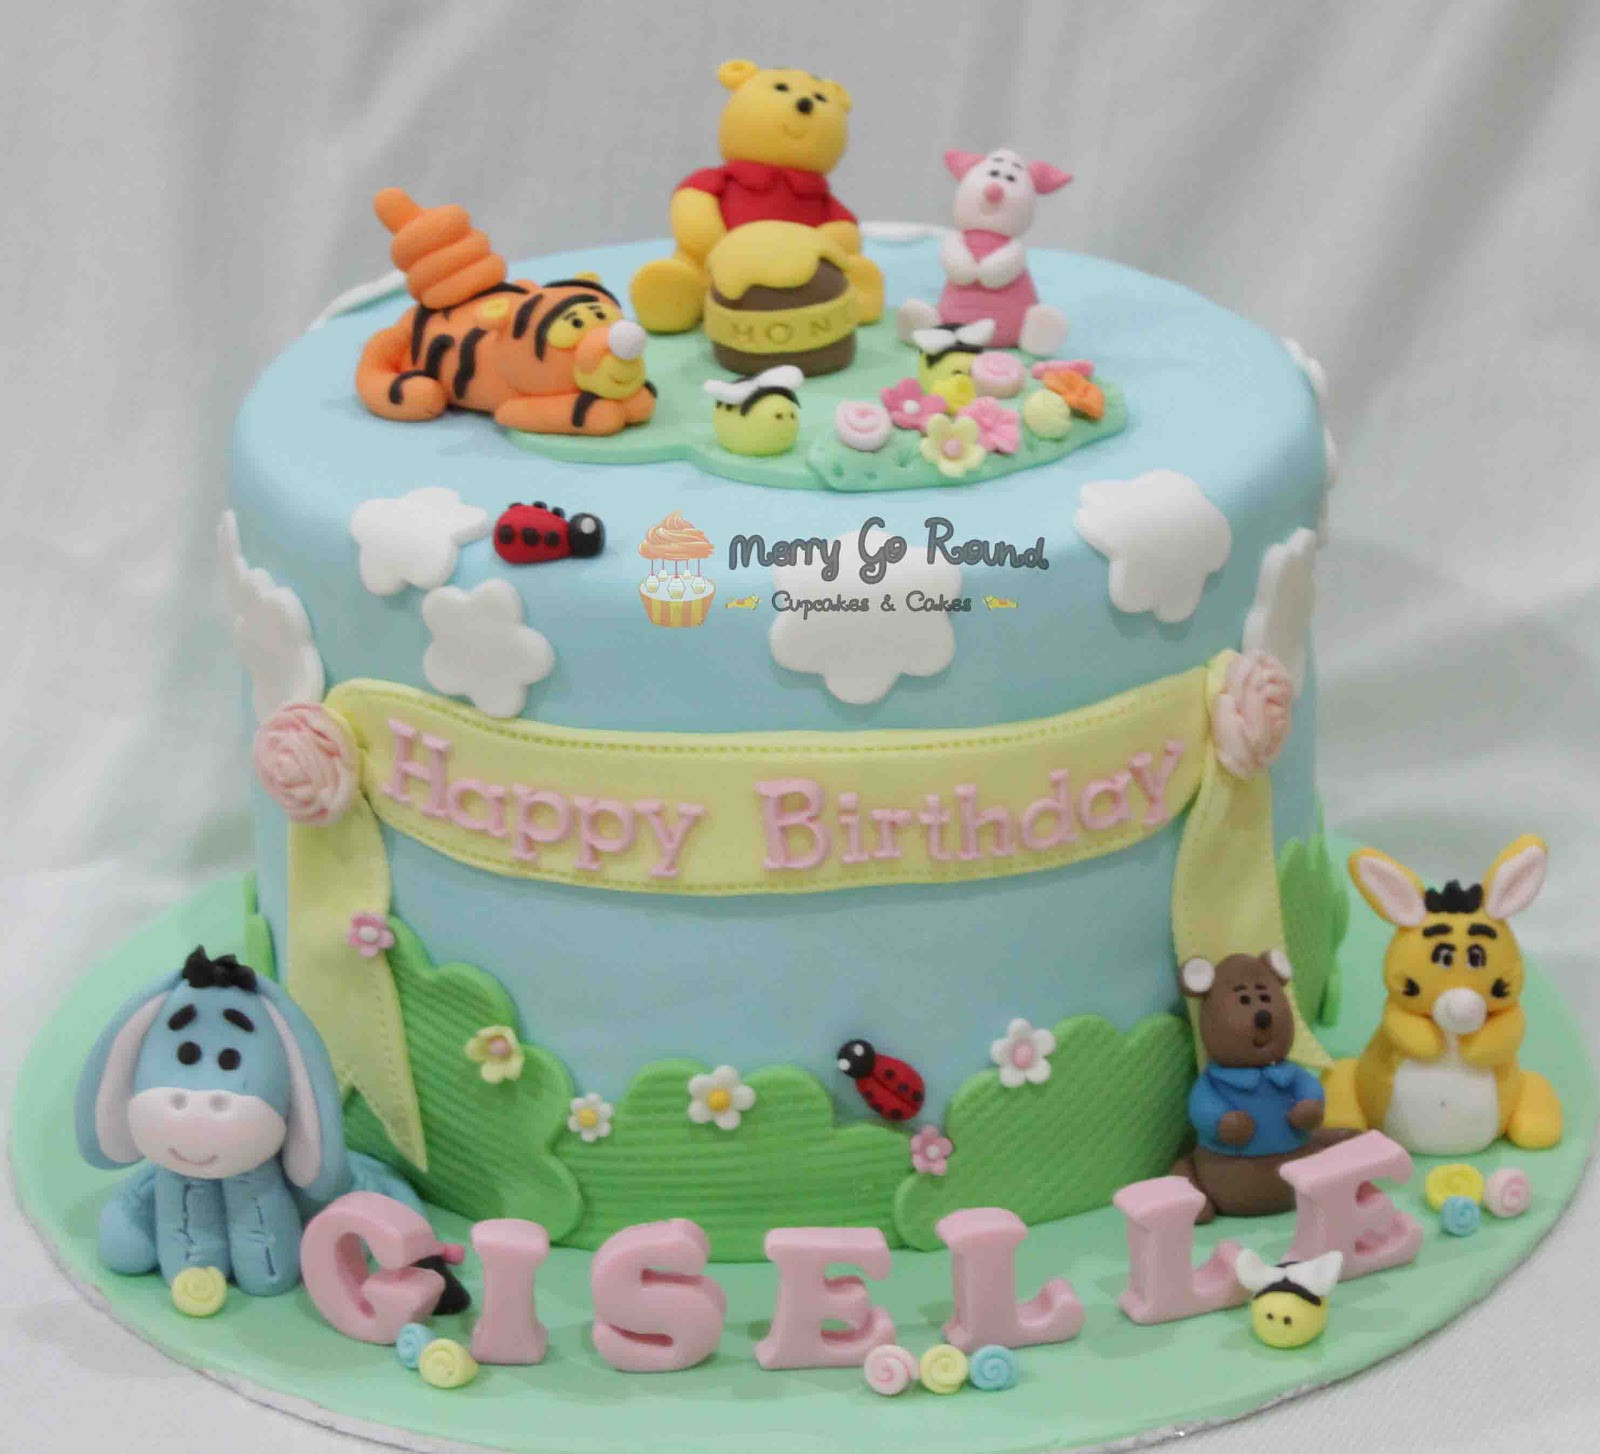 Winnie The Pooh Birthday Cakes
 Merry Go Round Cupcakes & Cakes Winnie the Pooh